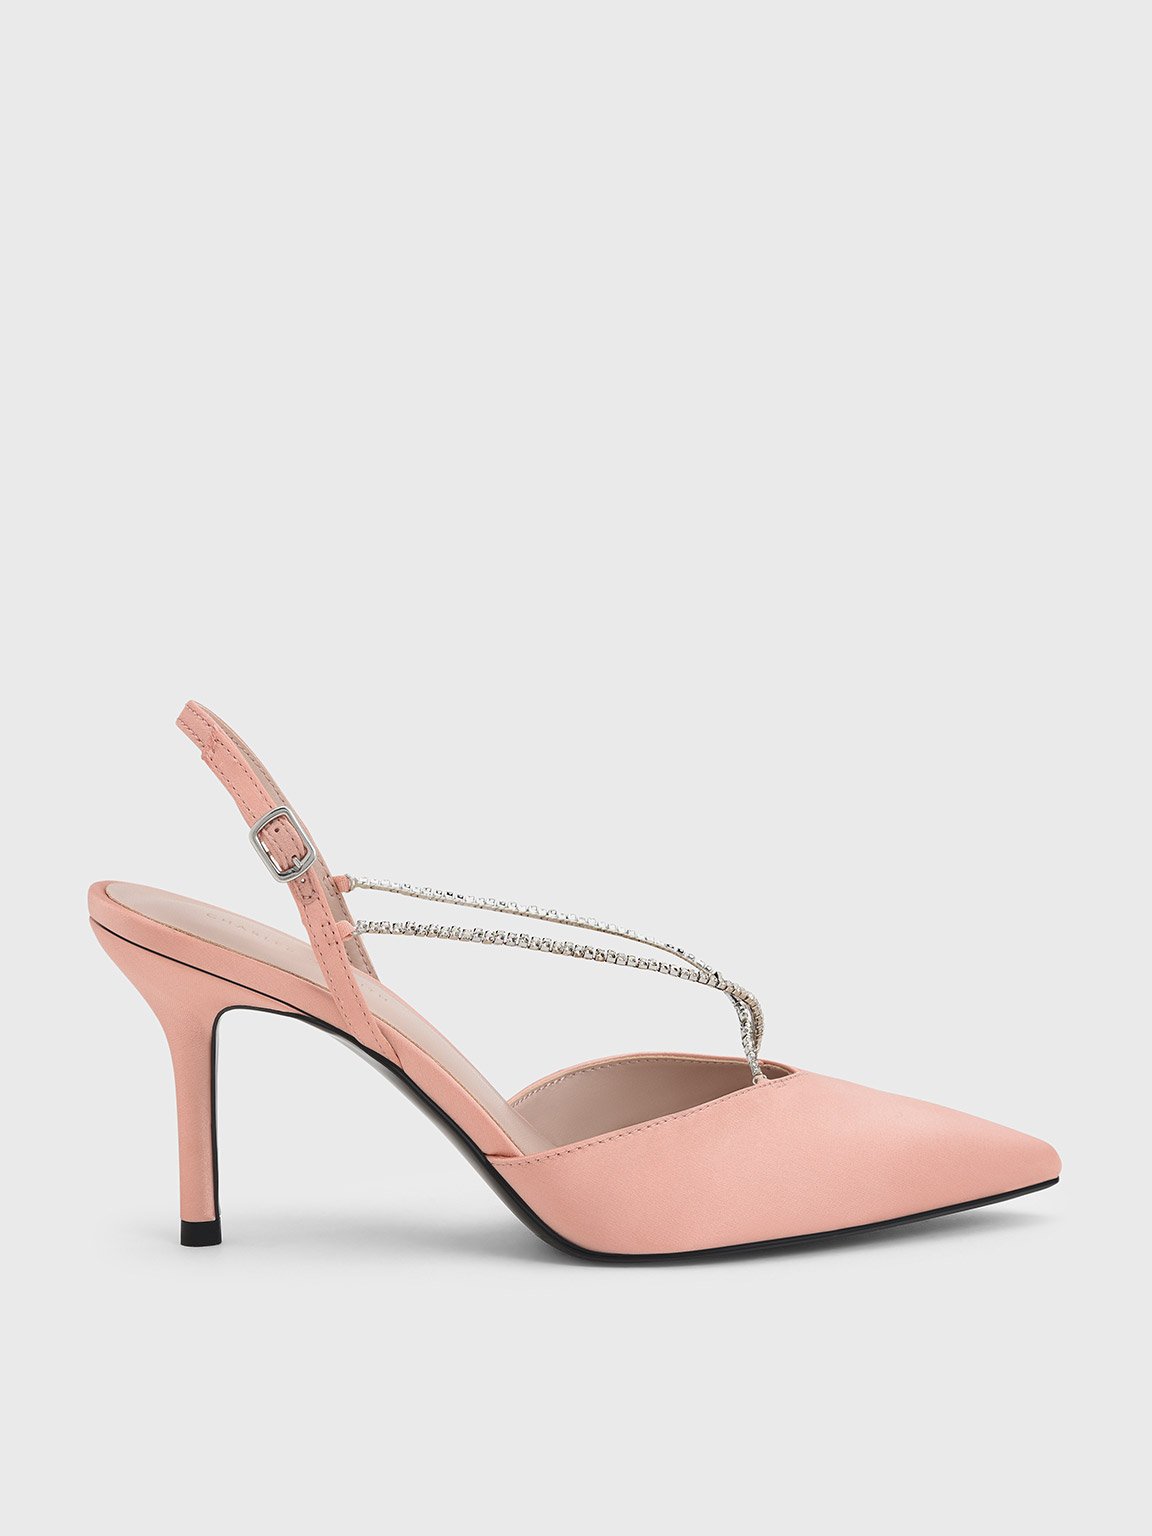 Zara shoes Pink/Red/Purple 37                  EU discount 83% WOMEN FASHION Footwear Elegant 